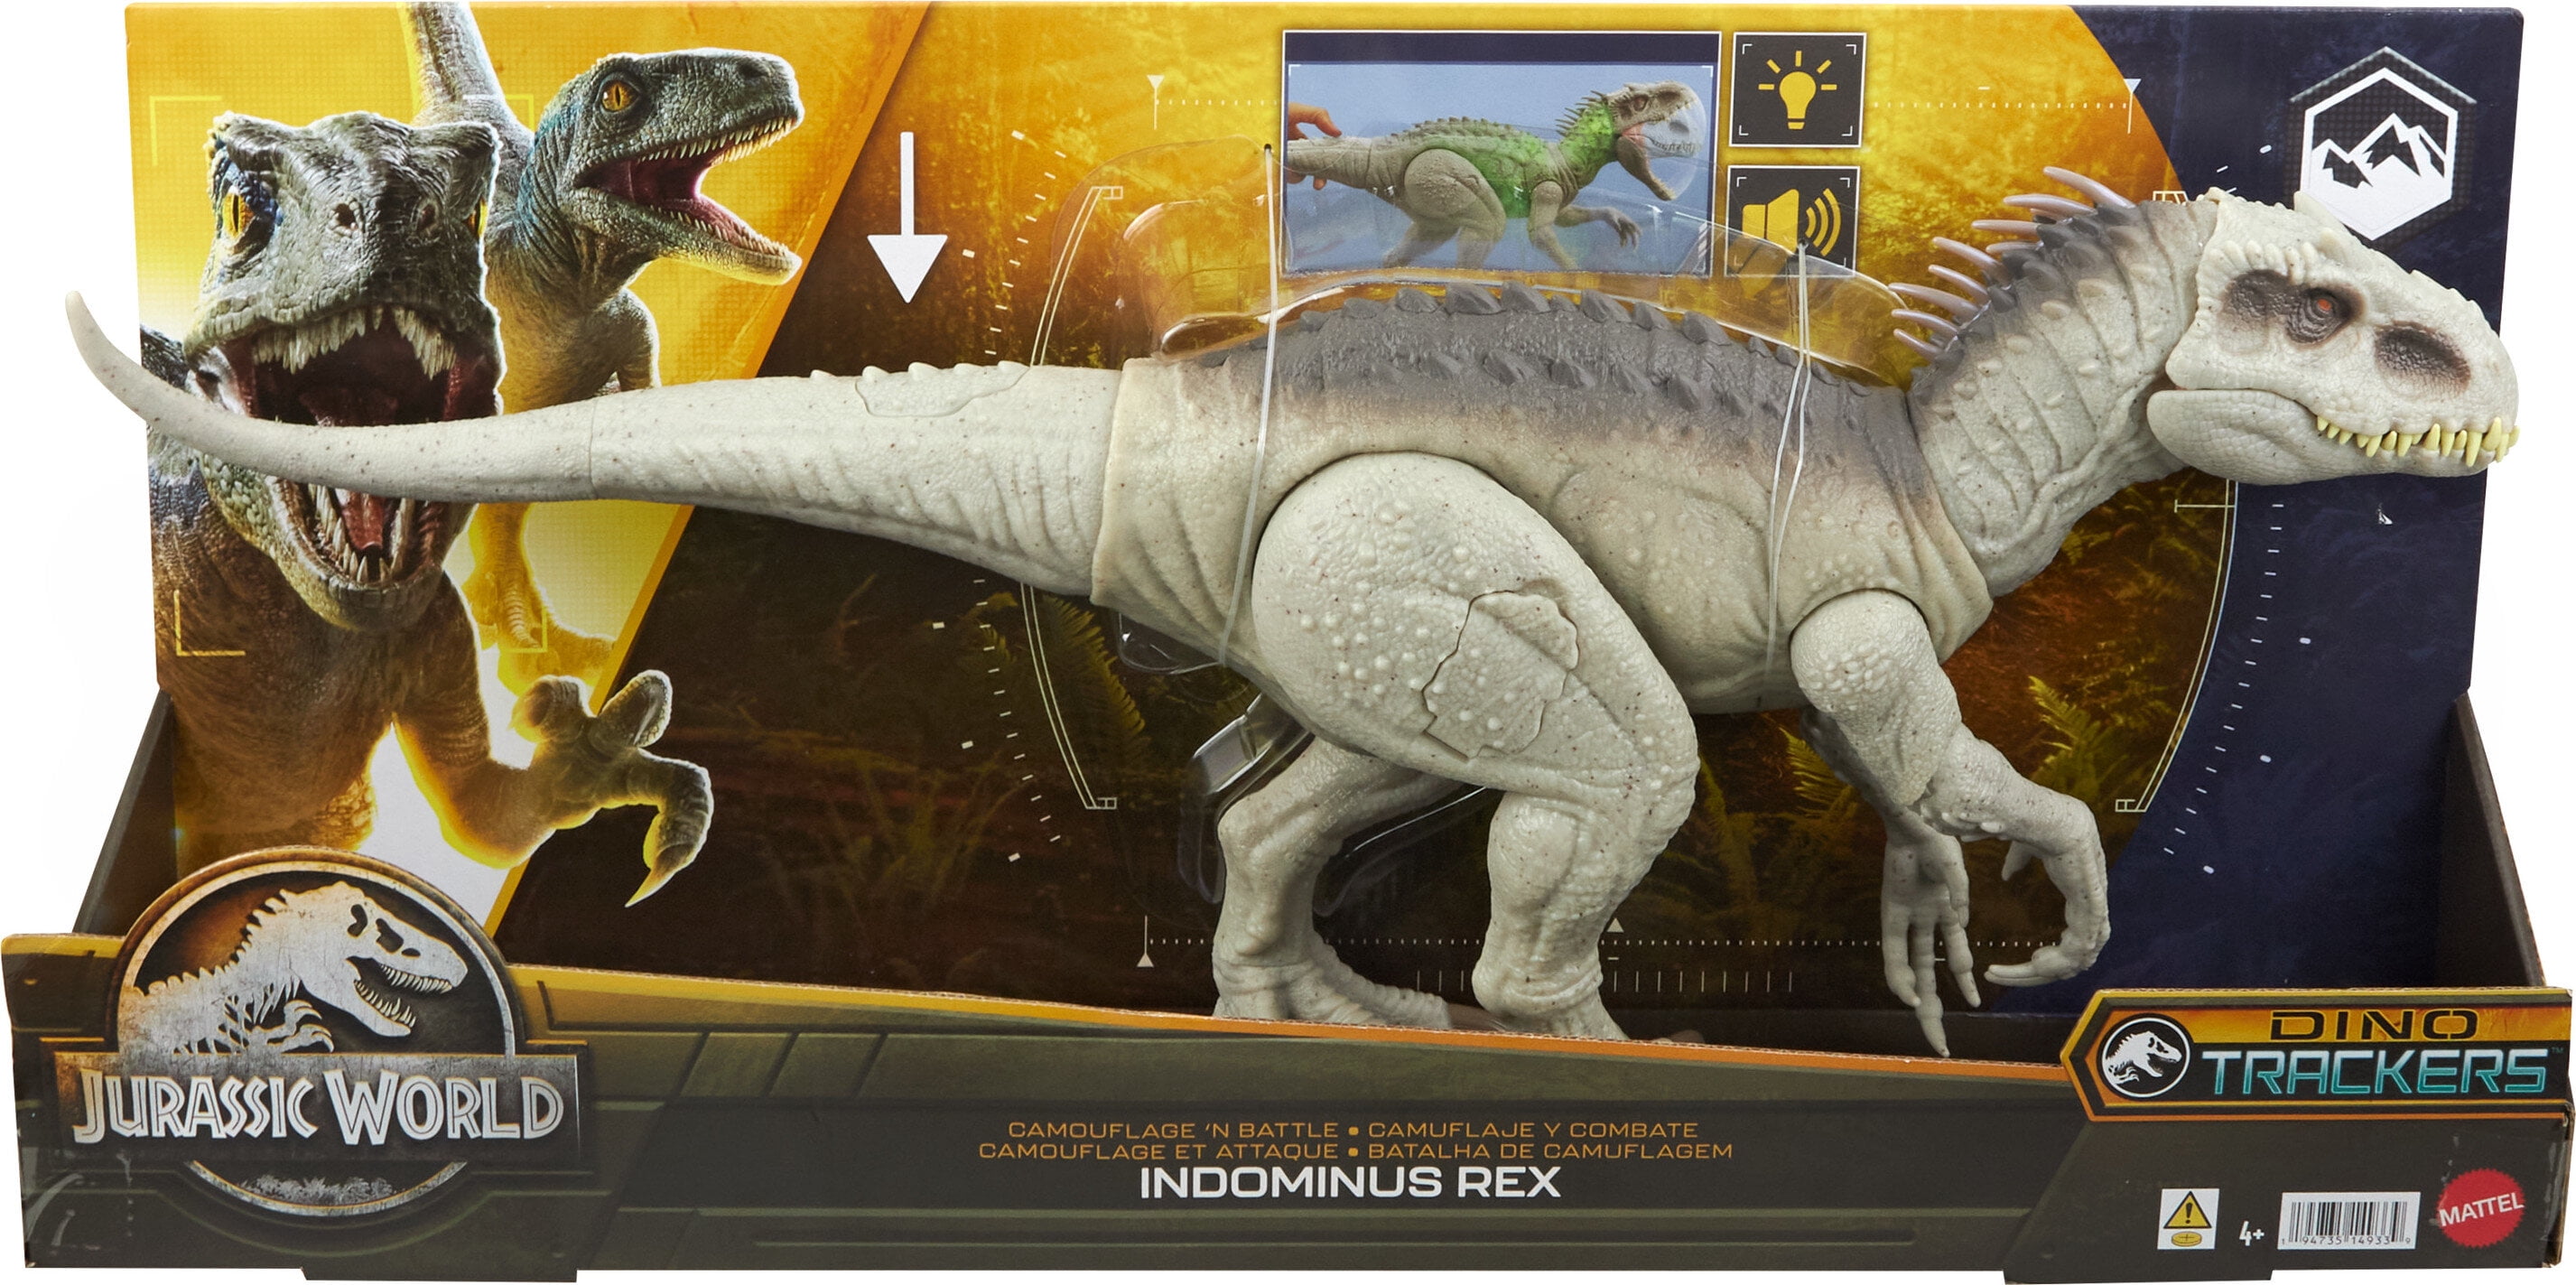 Jurassic World Camouflage 'N Battle Indominus Rex Dinosaur Action Figure  with Lights, Sound & Motion